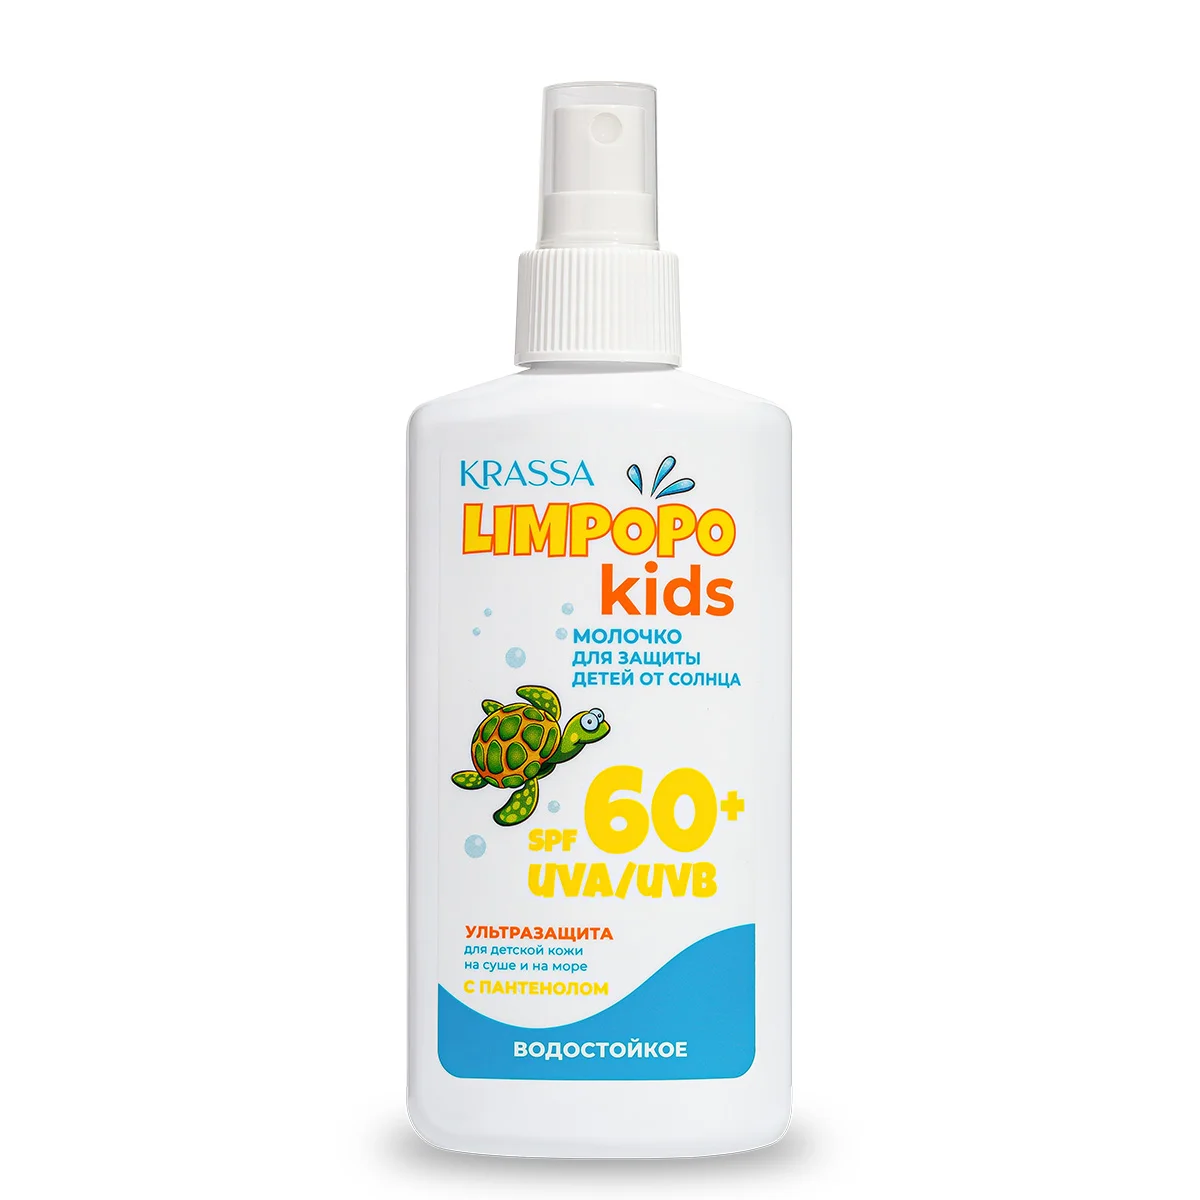 KRASSA Kids Limpopo Молочко для защиты детей от солнца SPF60+ 150 мл